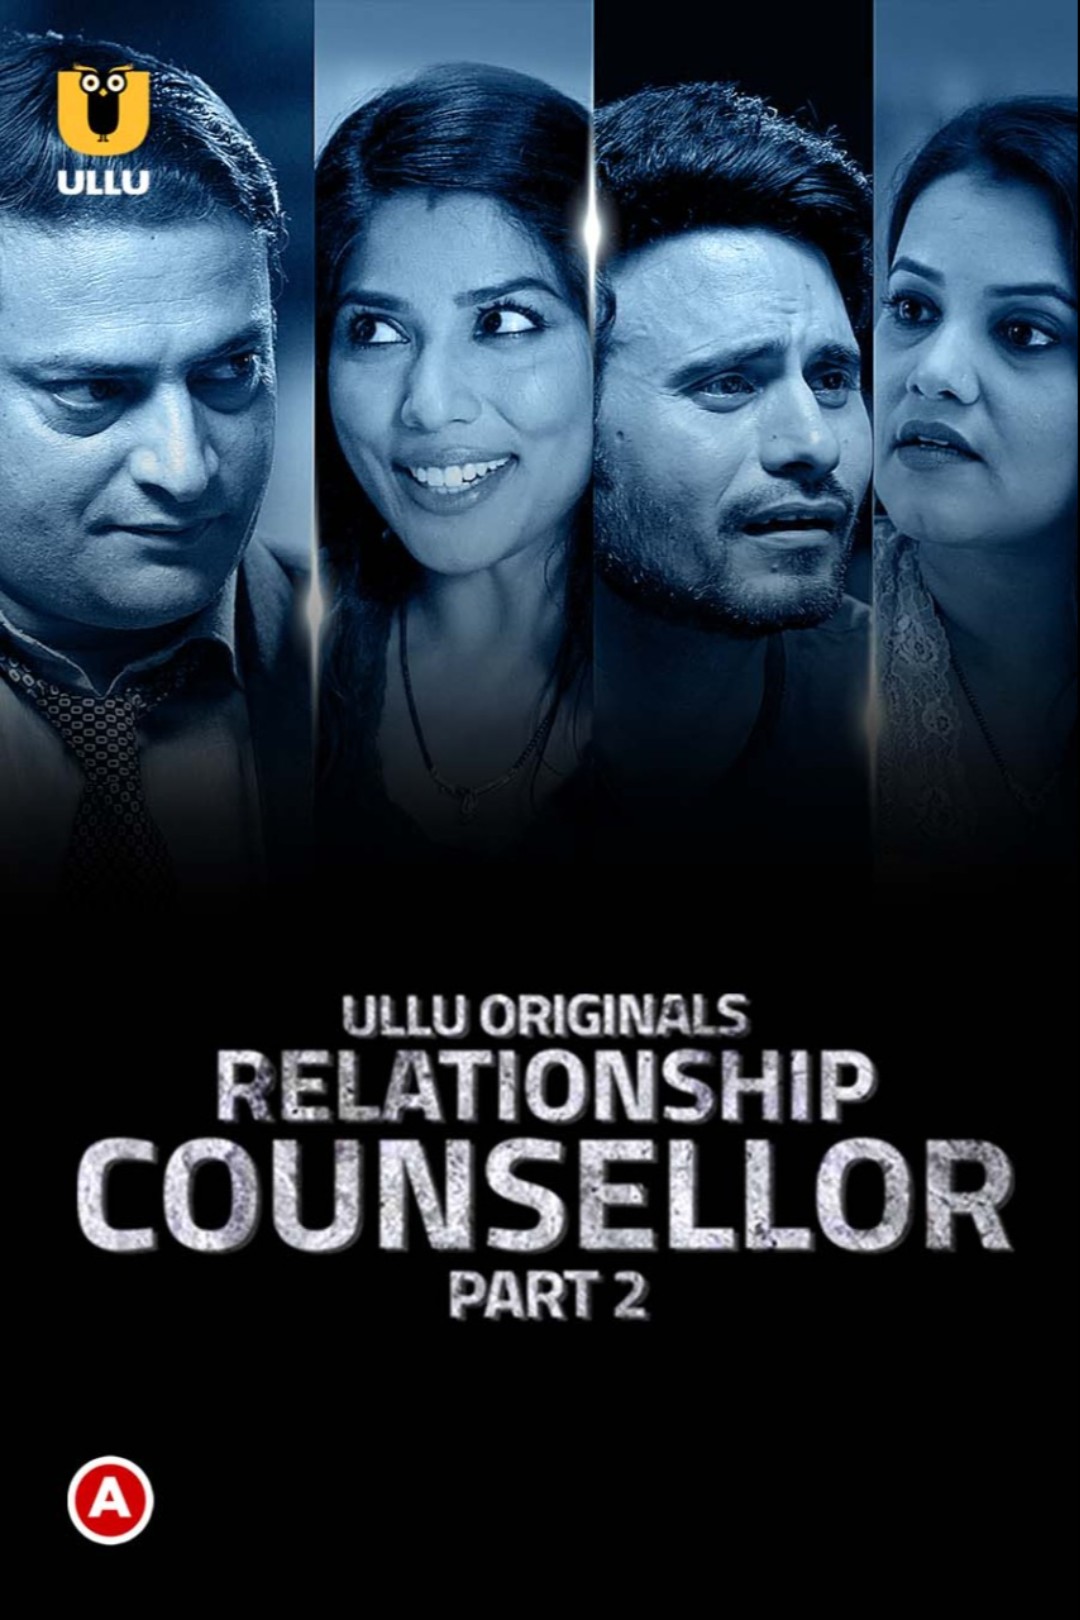 18+ Relationship Counsellor (Part 2) 2021 S01 Hindi Ullu Originals Complete Web Series 1080p HDRip 770MB x264 AAC